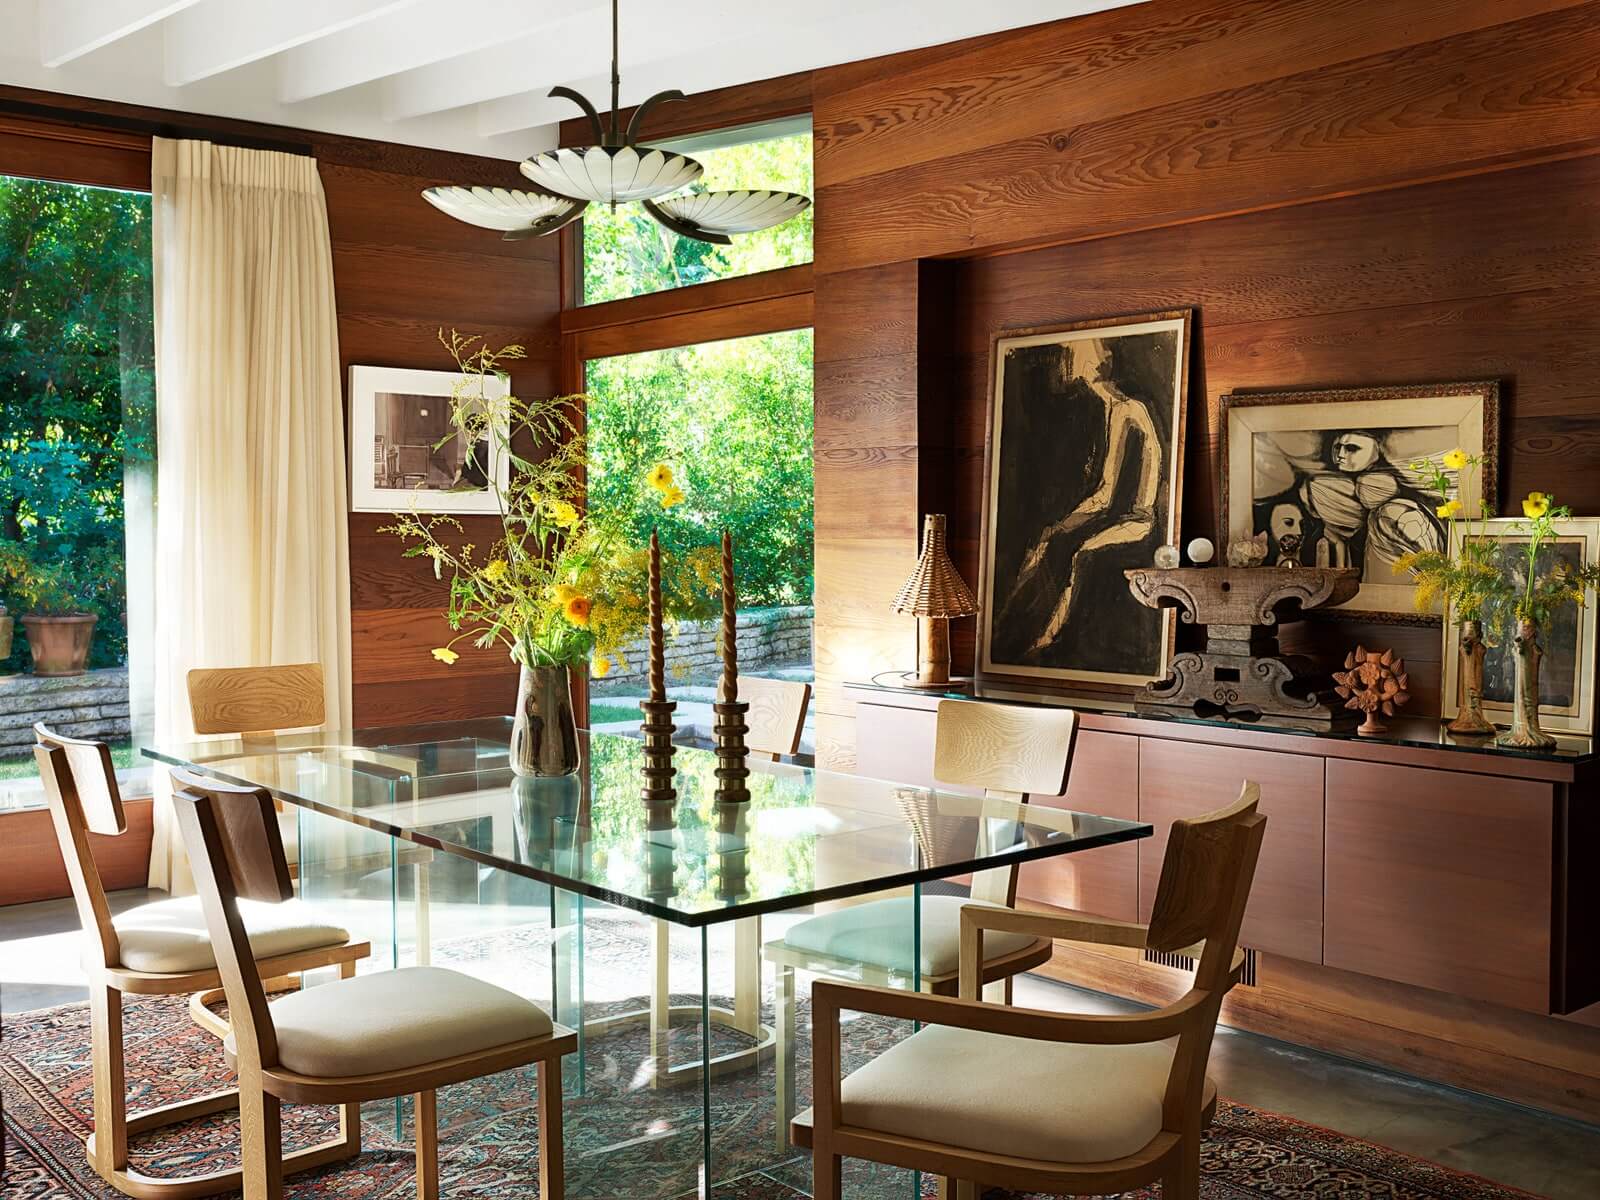 Dakota Johnson's Midcentury modern home in Los Angeles